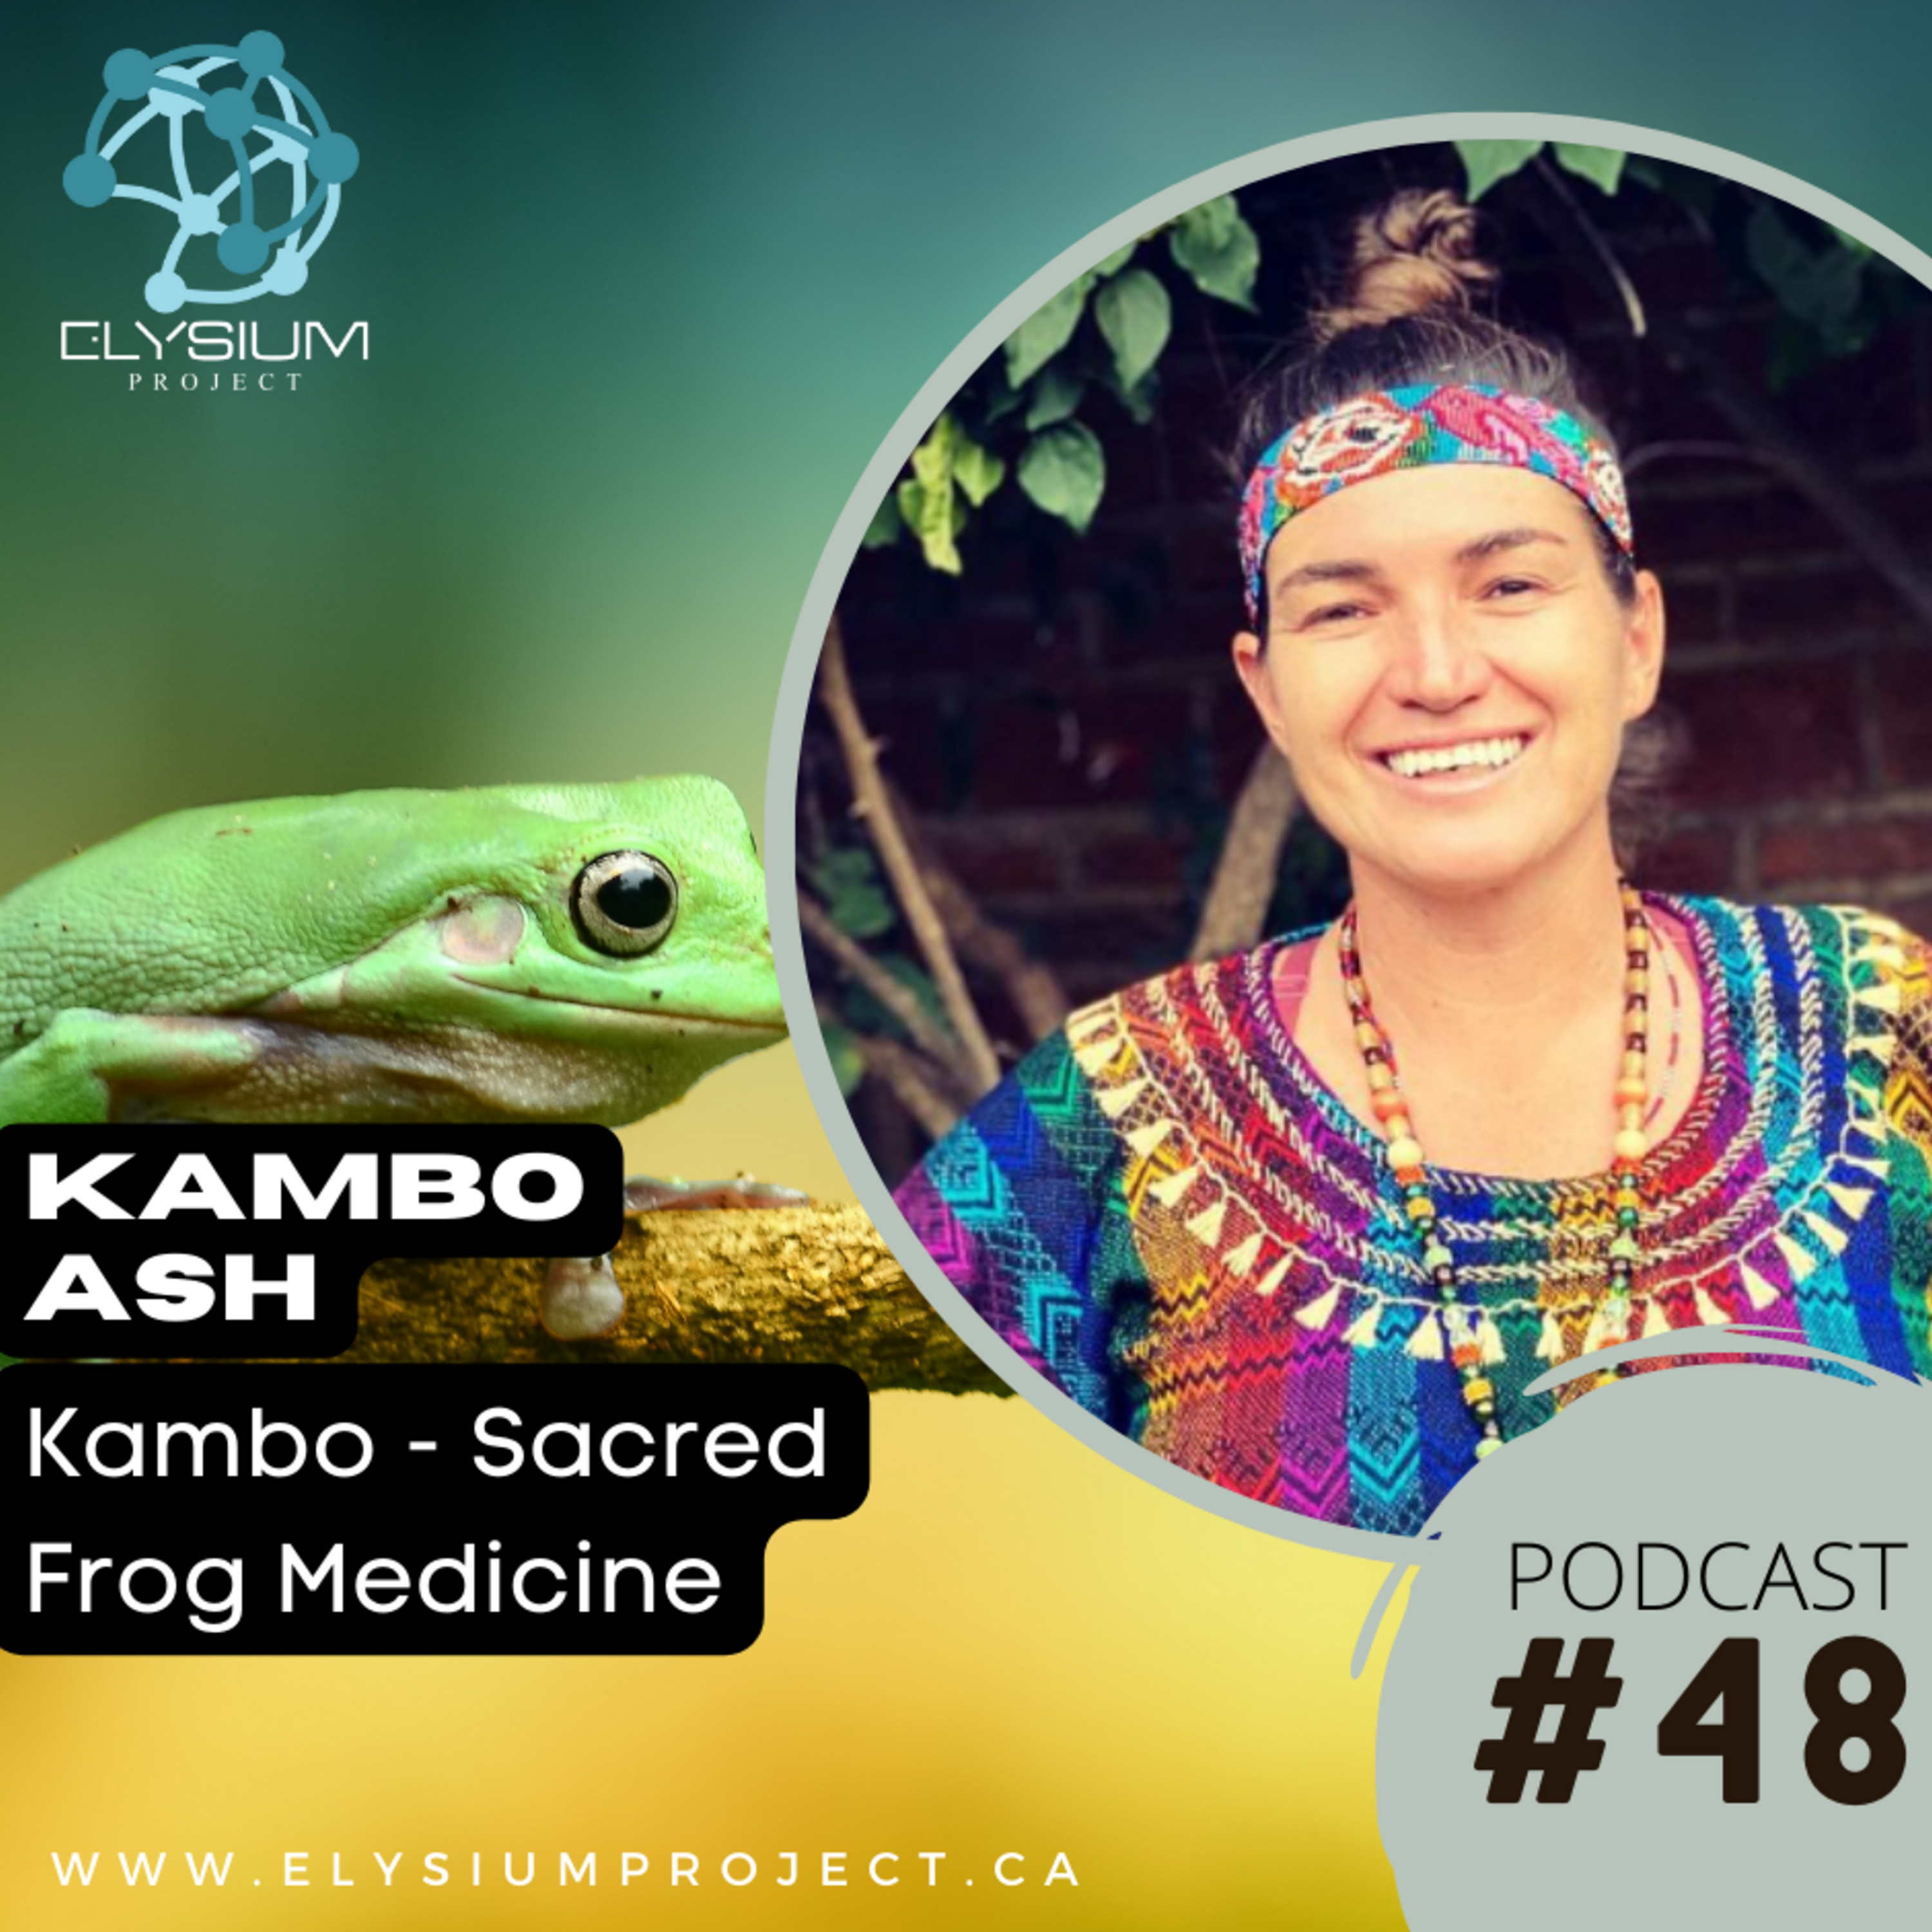 Episode 48: Kambo - Sacred Frog Medicine with Kambo Ash